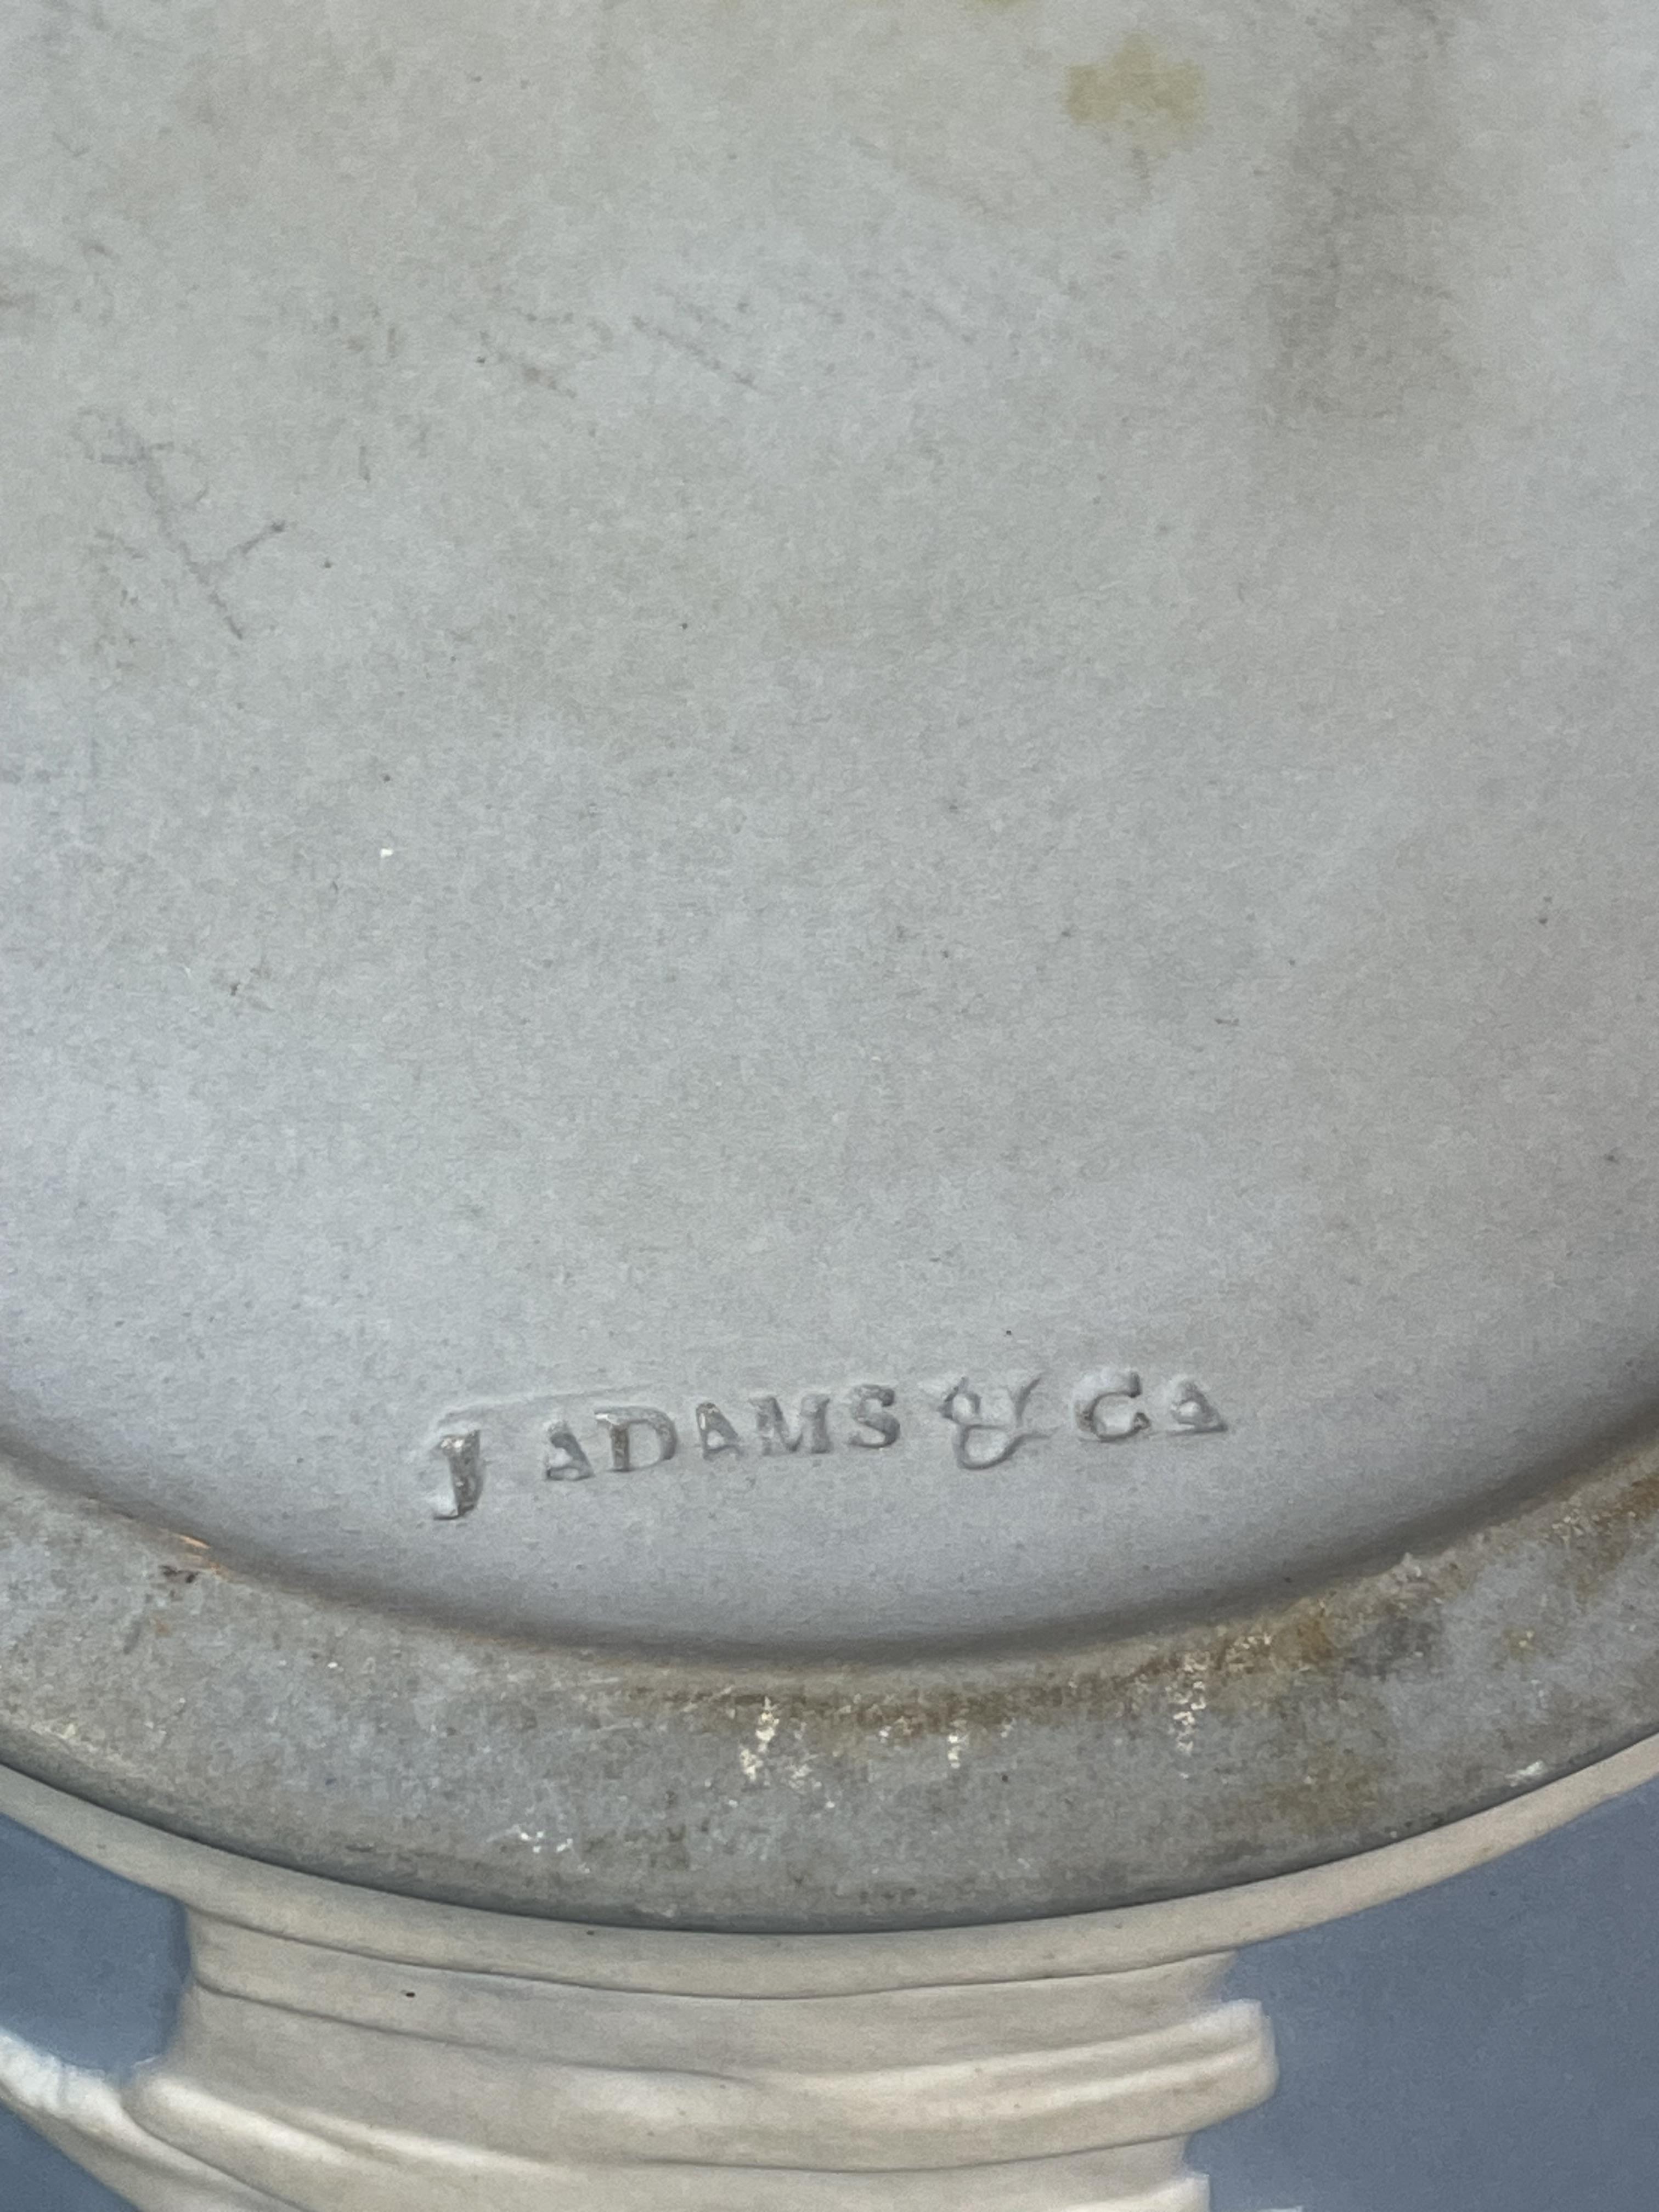 Adams & Co, Wedgwood Style Urn - Image 2 of 2